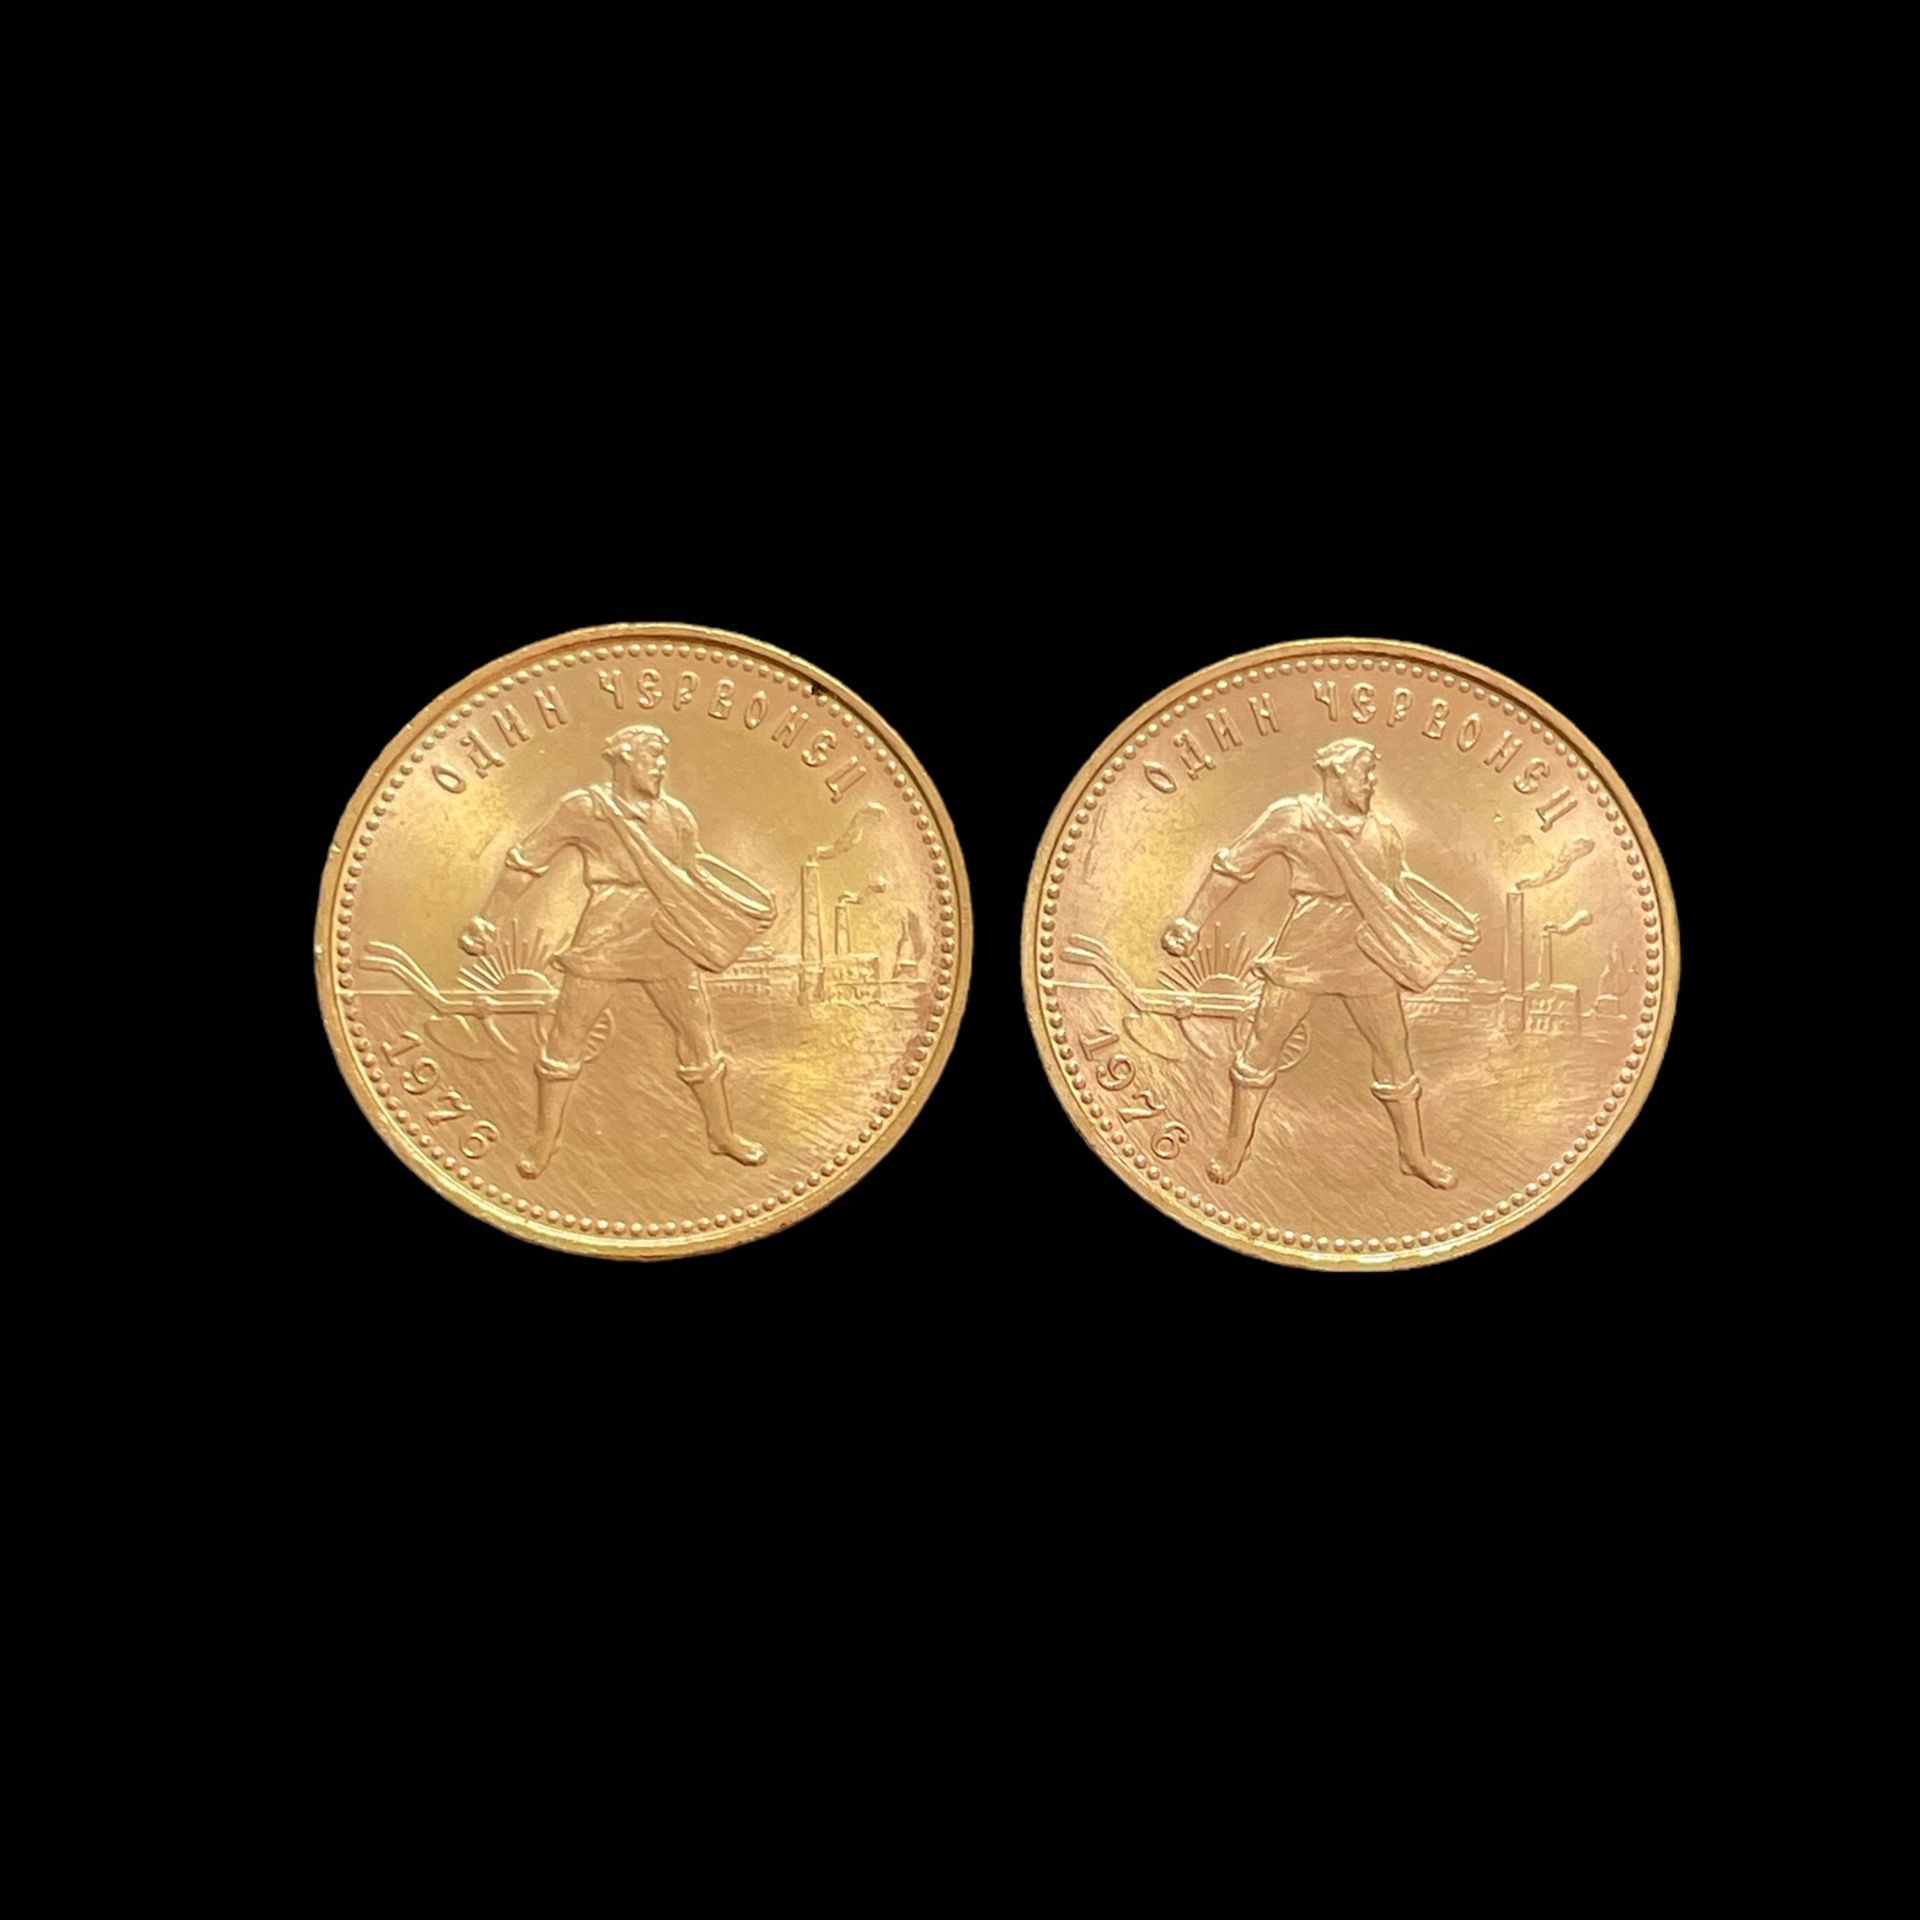 2 Goldmünzen